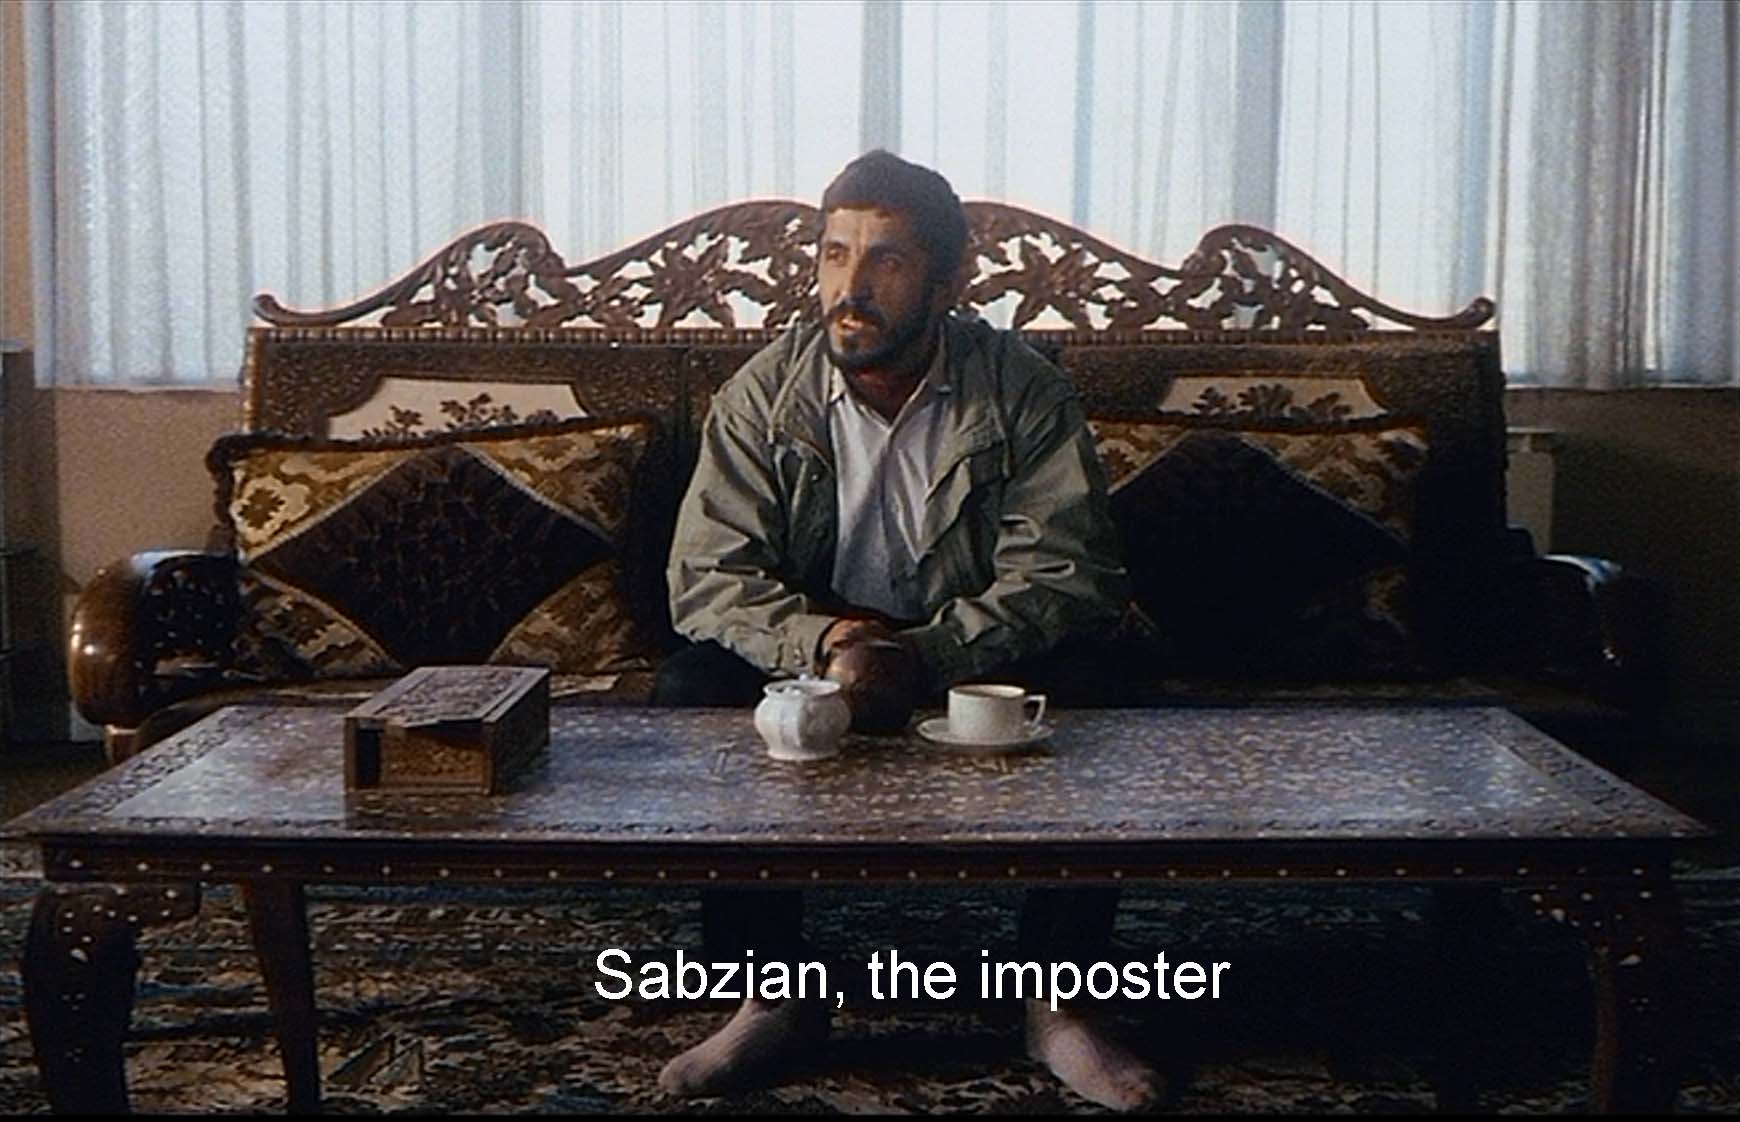 Sabzian the imposter